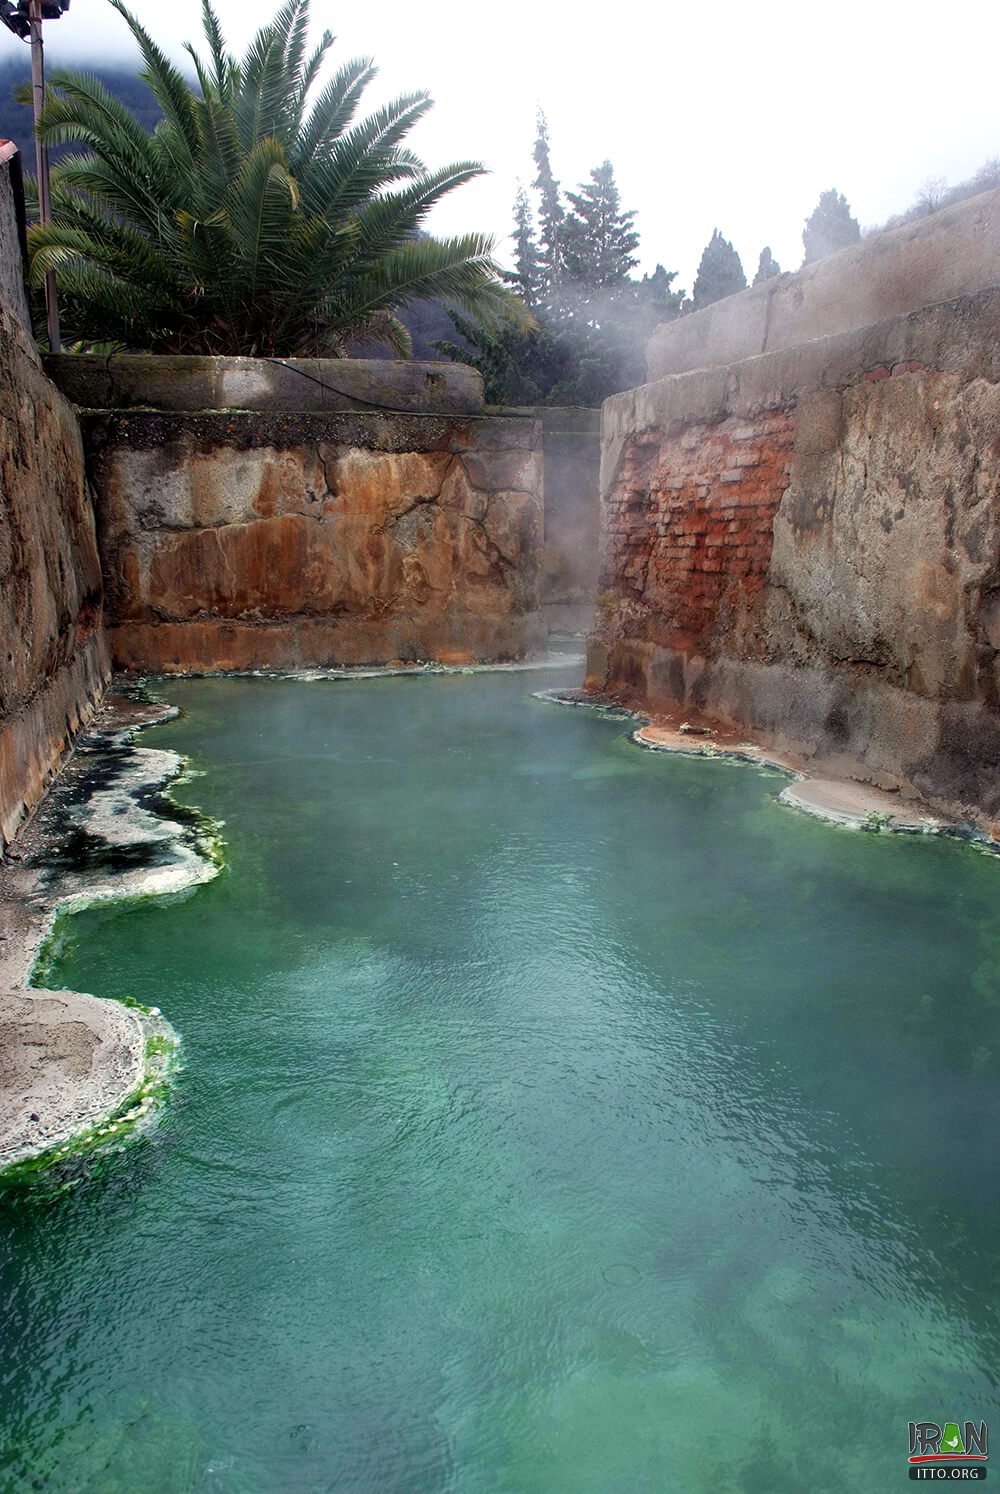 Ramsar Hot Springs,Ramsar Hot Water,Abegarm-e Ramsar,ramasar thermal spring,ramsar hot spring,abgarm ramsat,ramsar hotwater,آب گرم رامسر,چشمه های آبگرم رامسر,abgarm